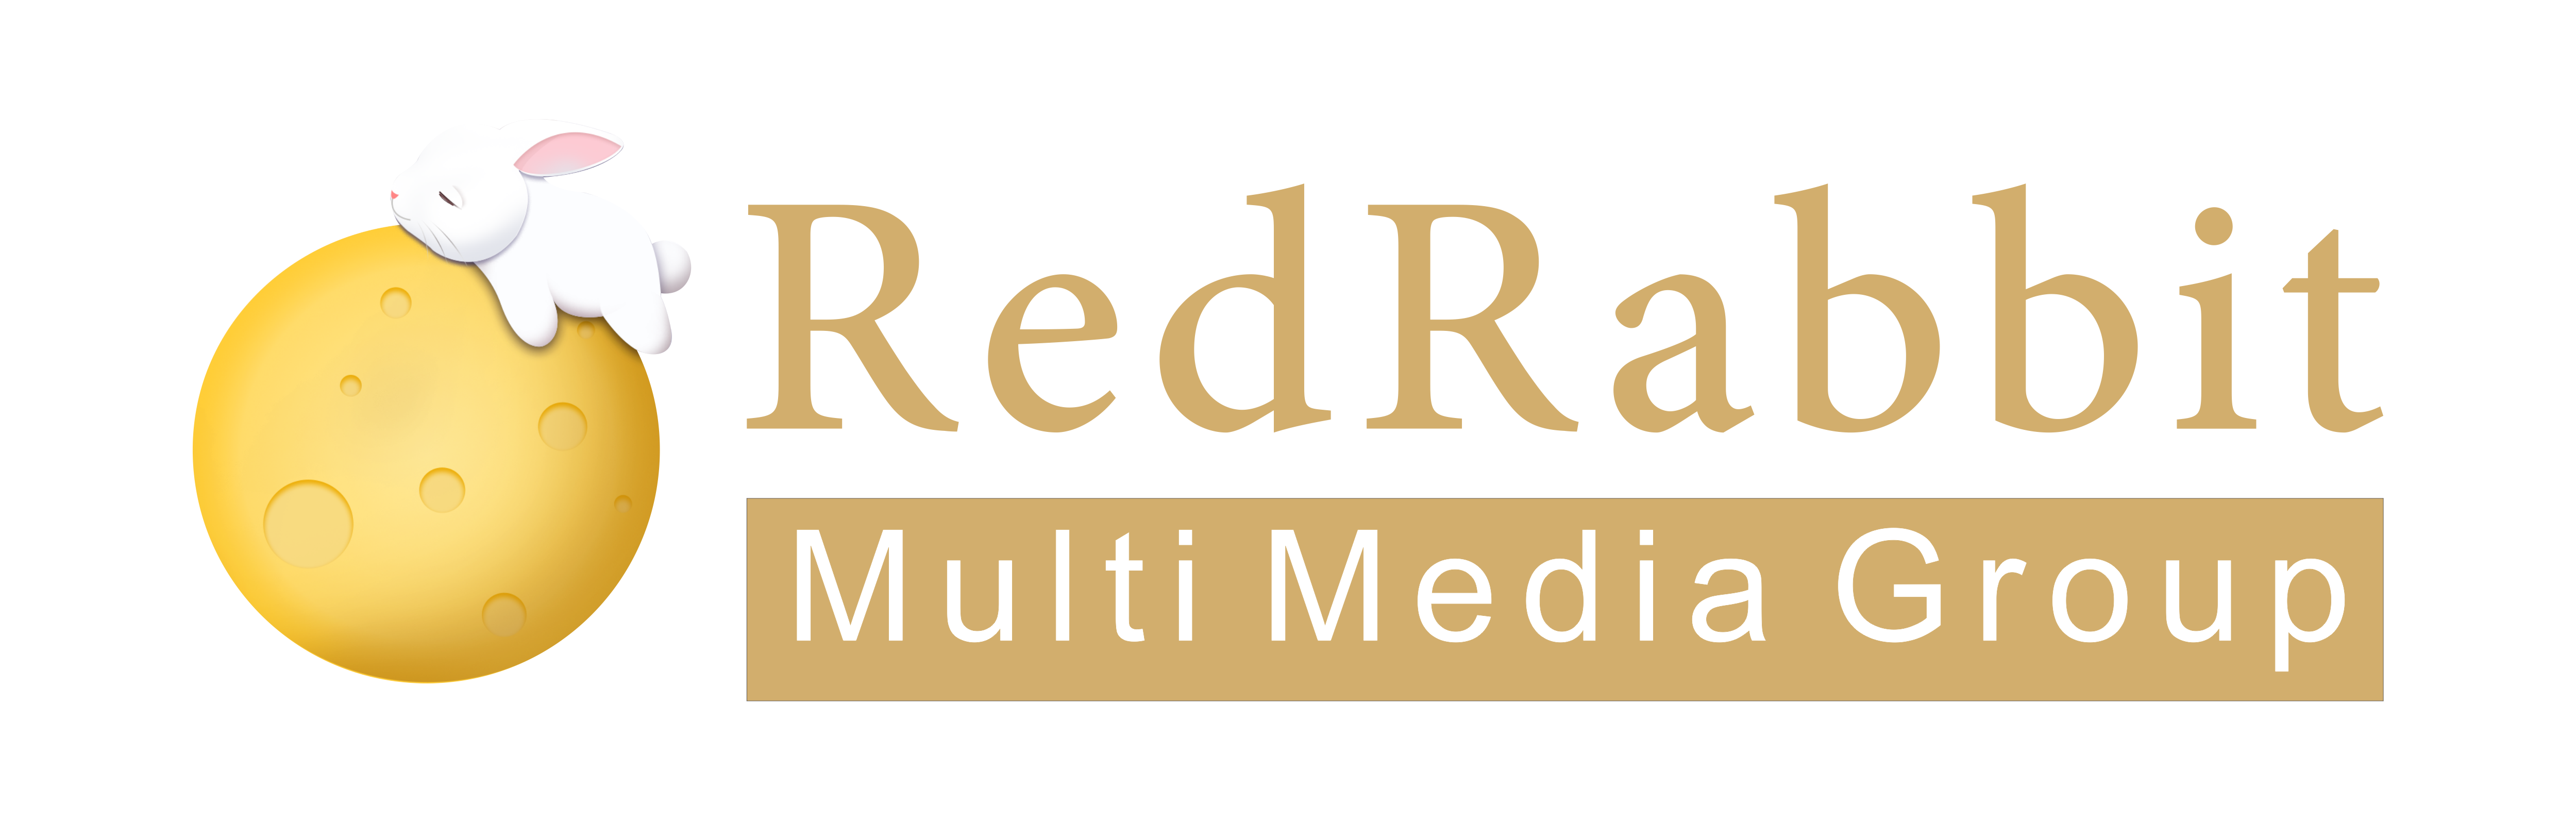 Red Rabbit Multi Media